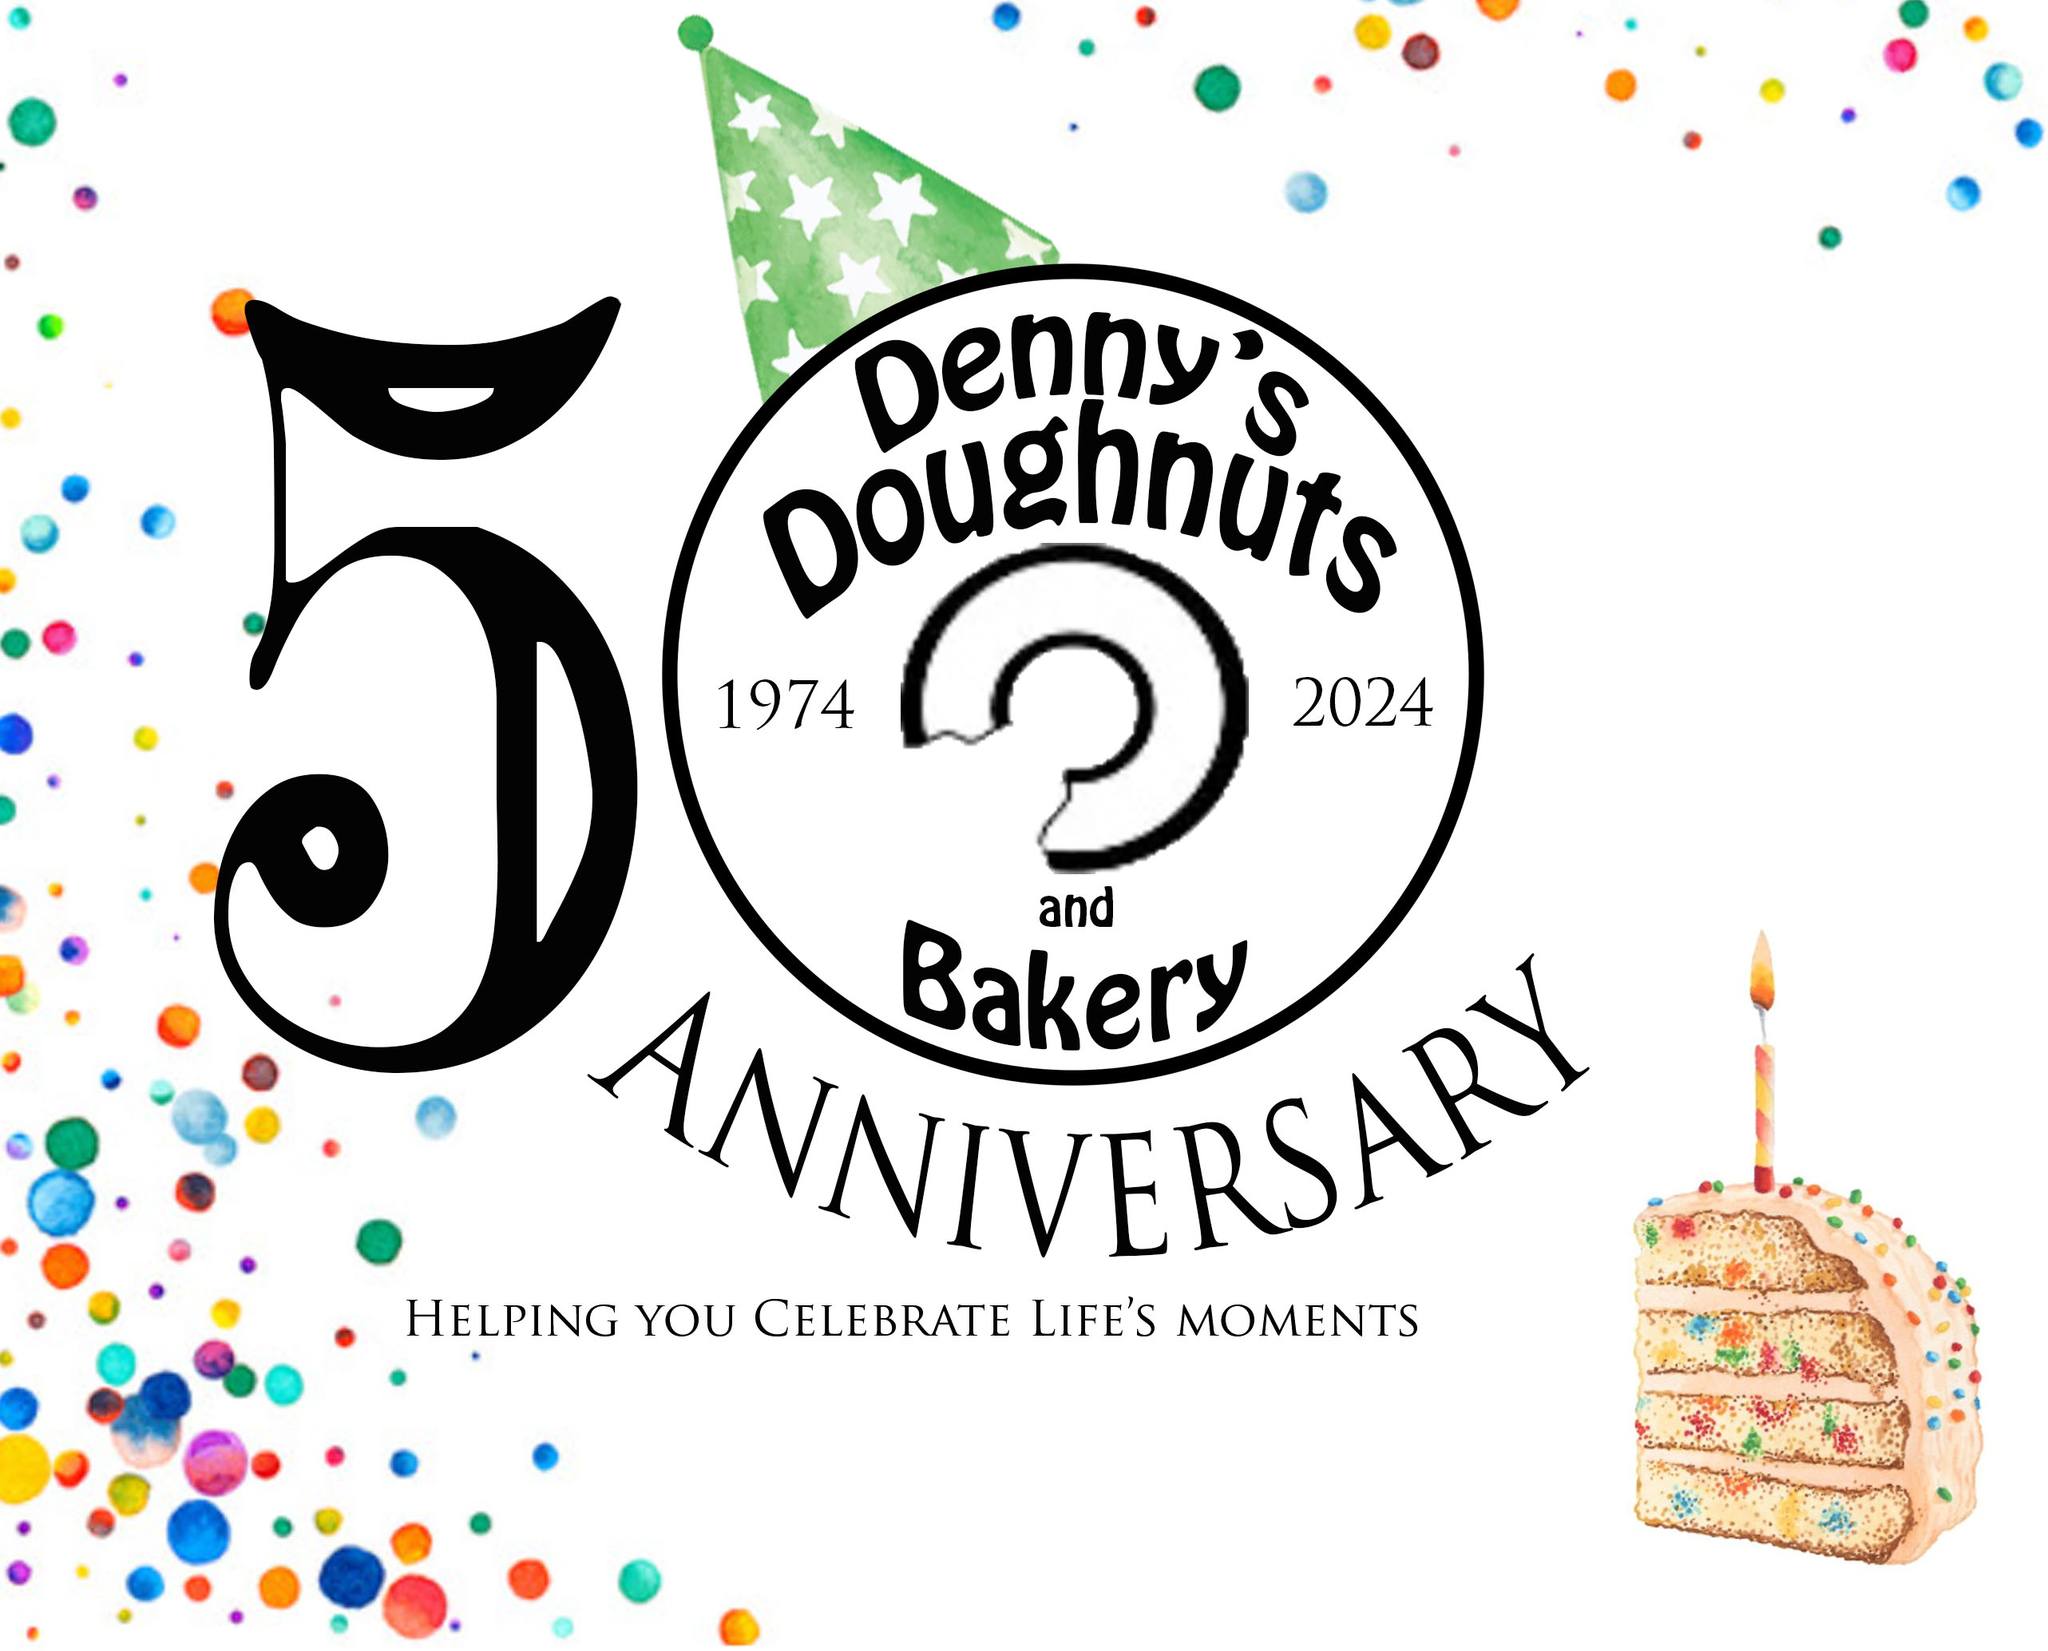 Local bakery celebrates 50-years of operation on Monday